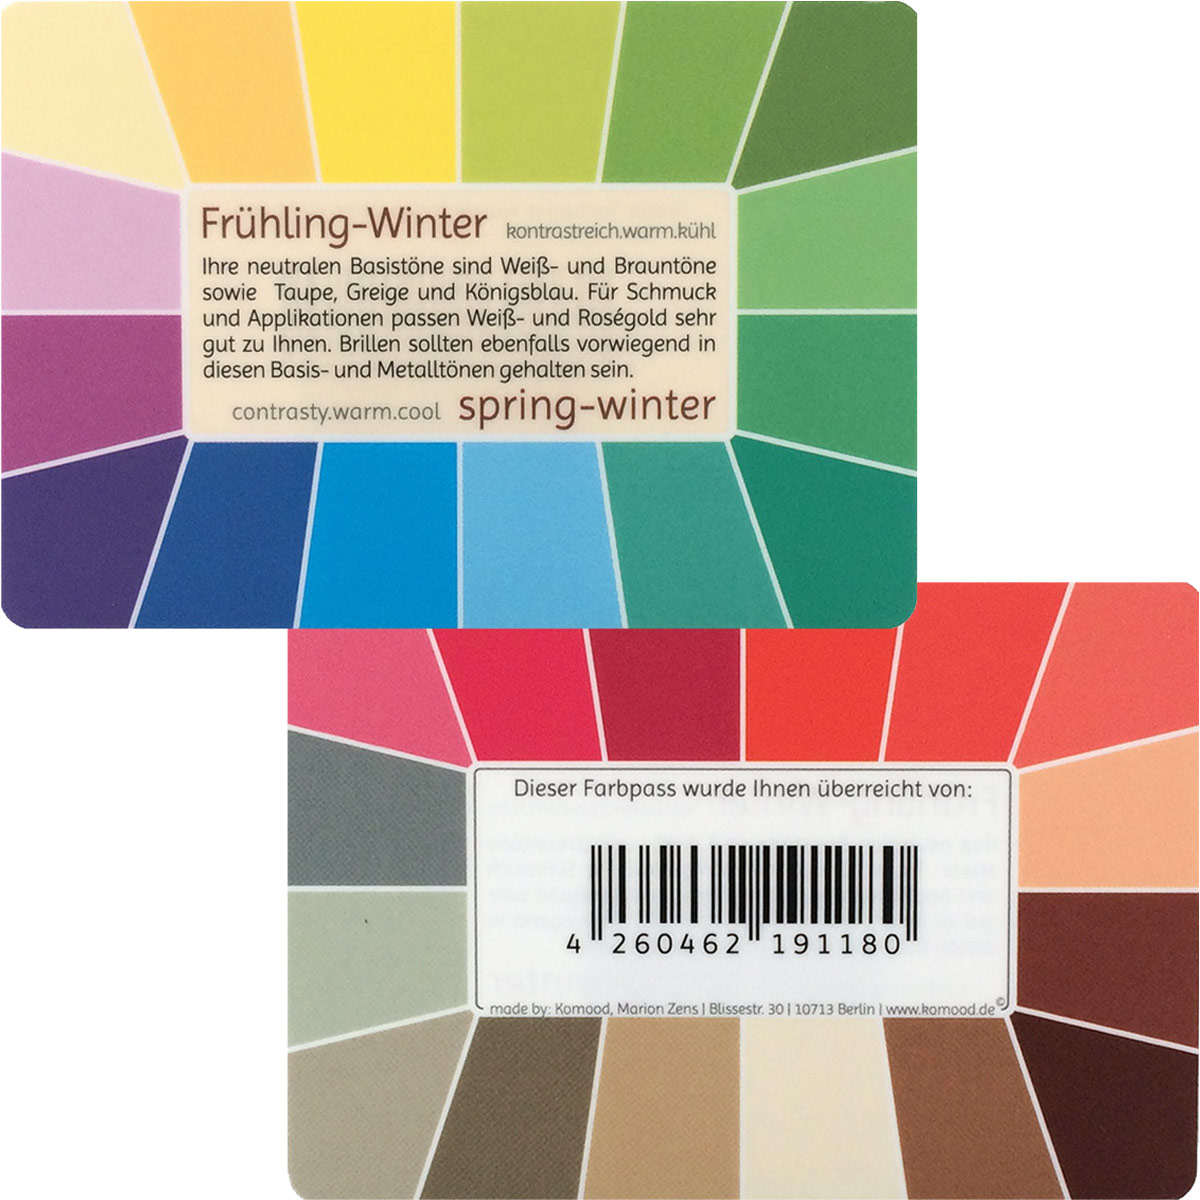 Farbpass Frühling-Winter - Memo, 32 Farben